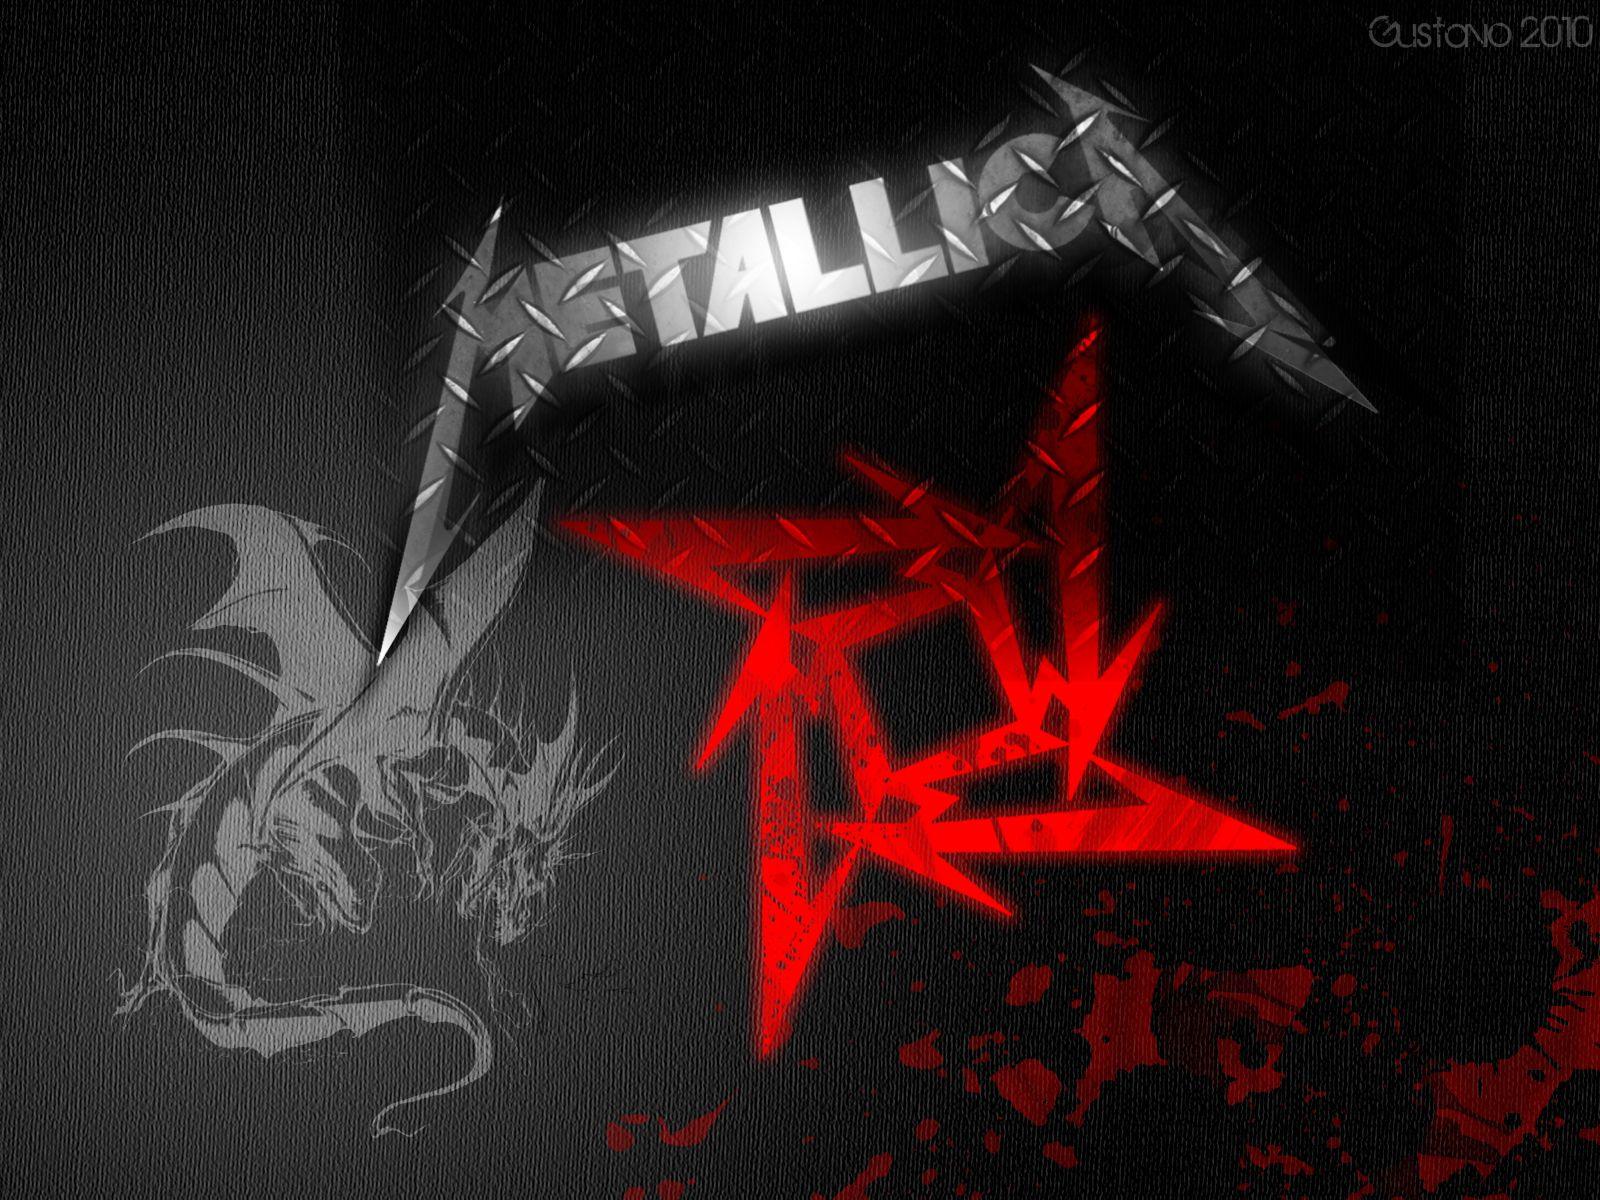 Metallica Wallpaper, Image Collection of Metallica